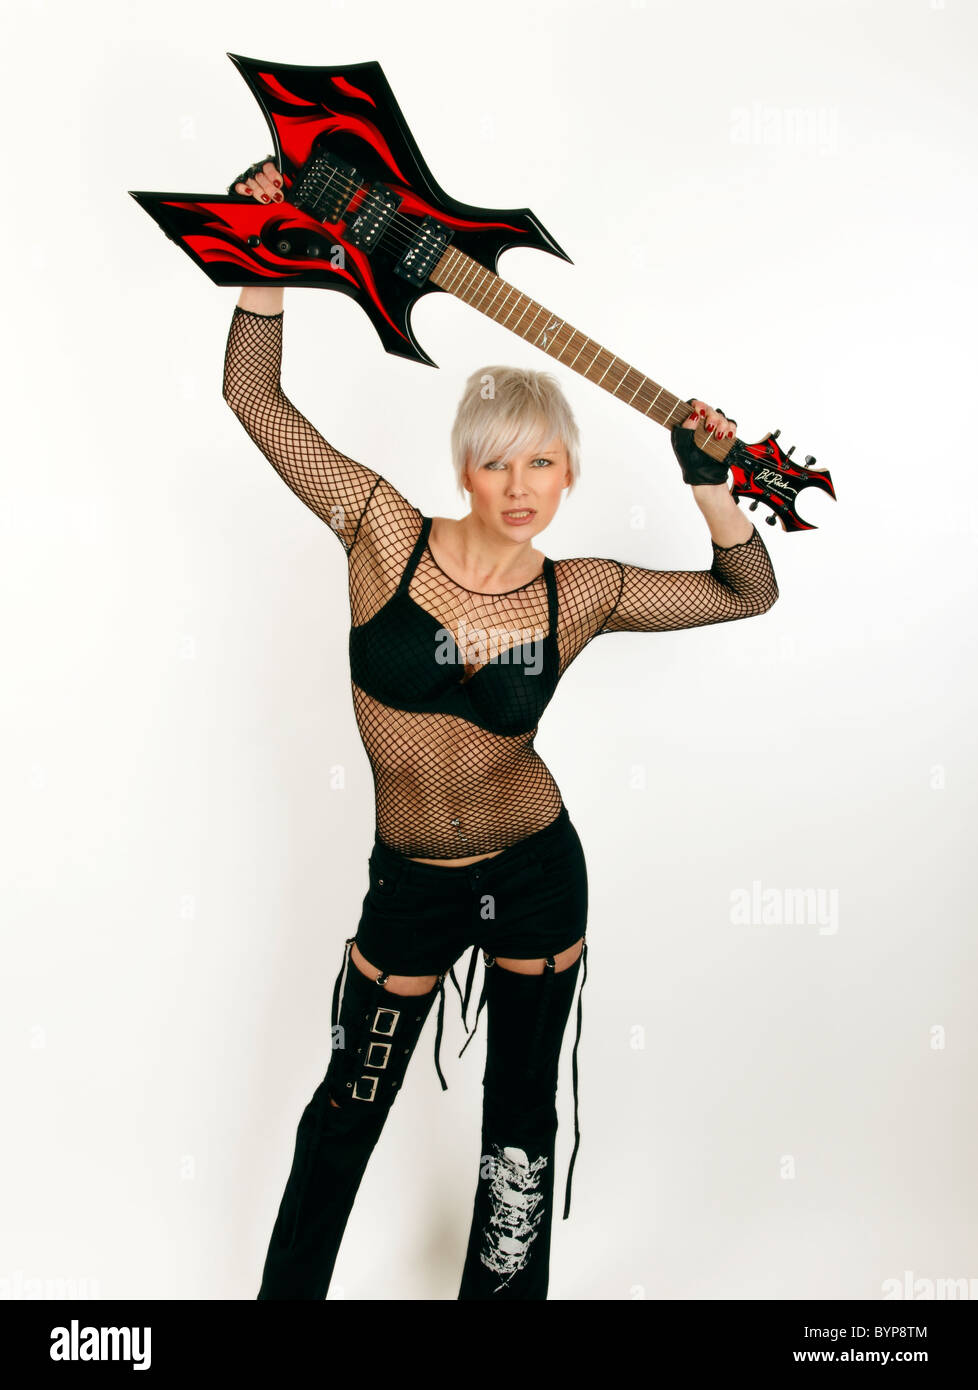 rock chick holding a warlock heavy metal guitar Stock Photo